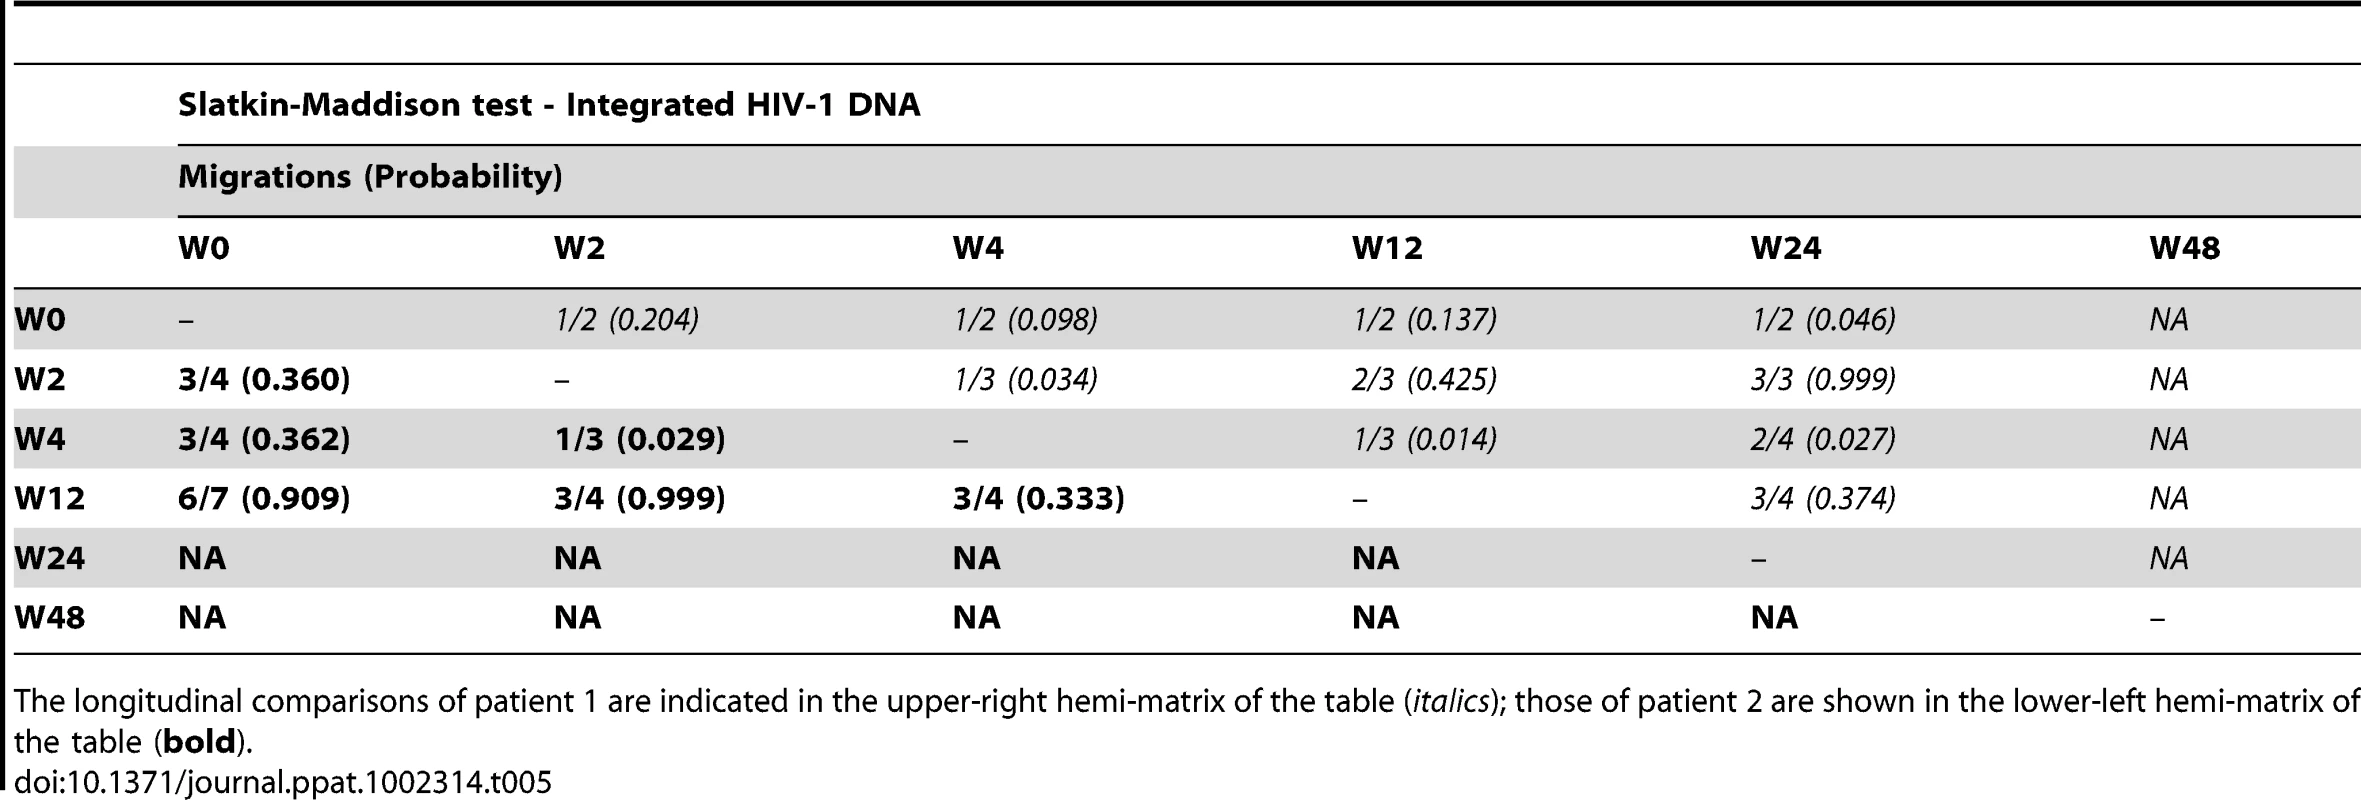 Temporal population structure: Slatkin-Maddison test for comparison between longitudinal integrated HIV-1 DNA.